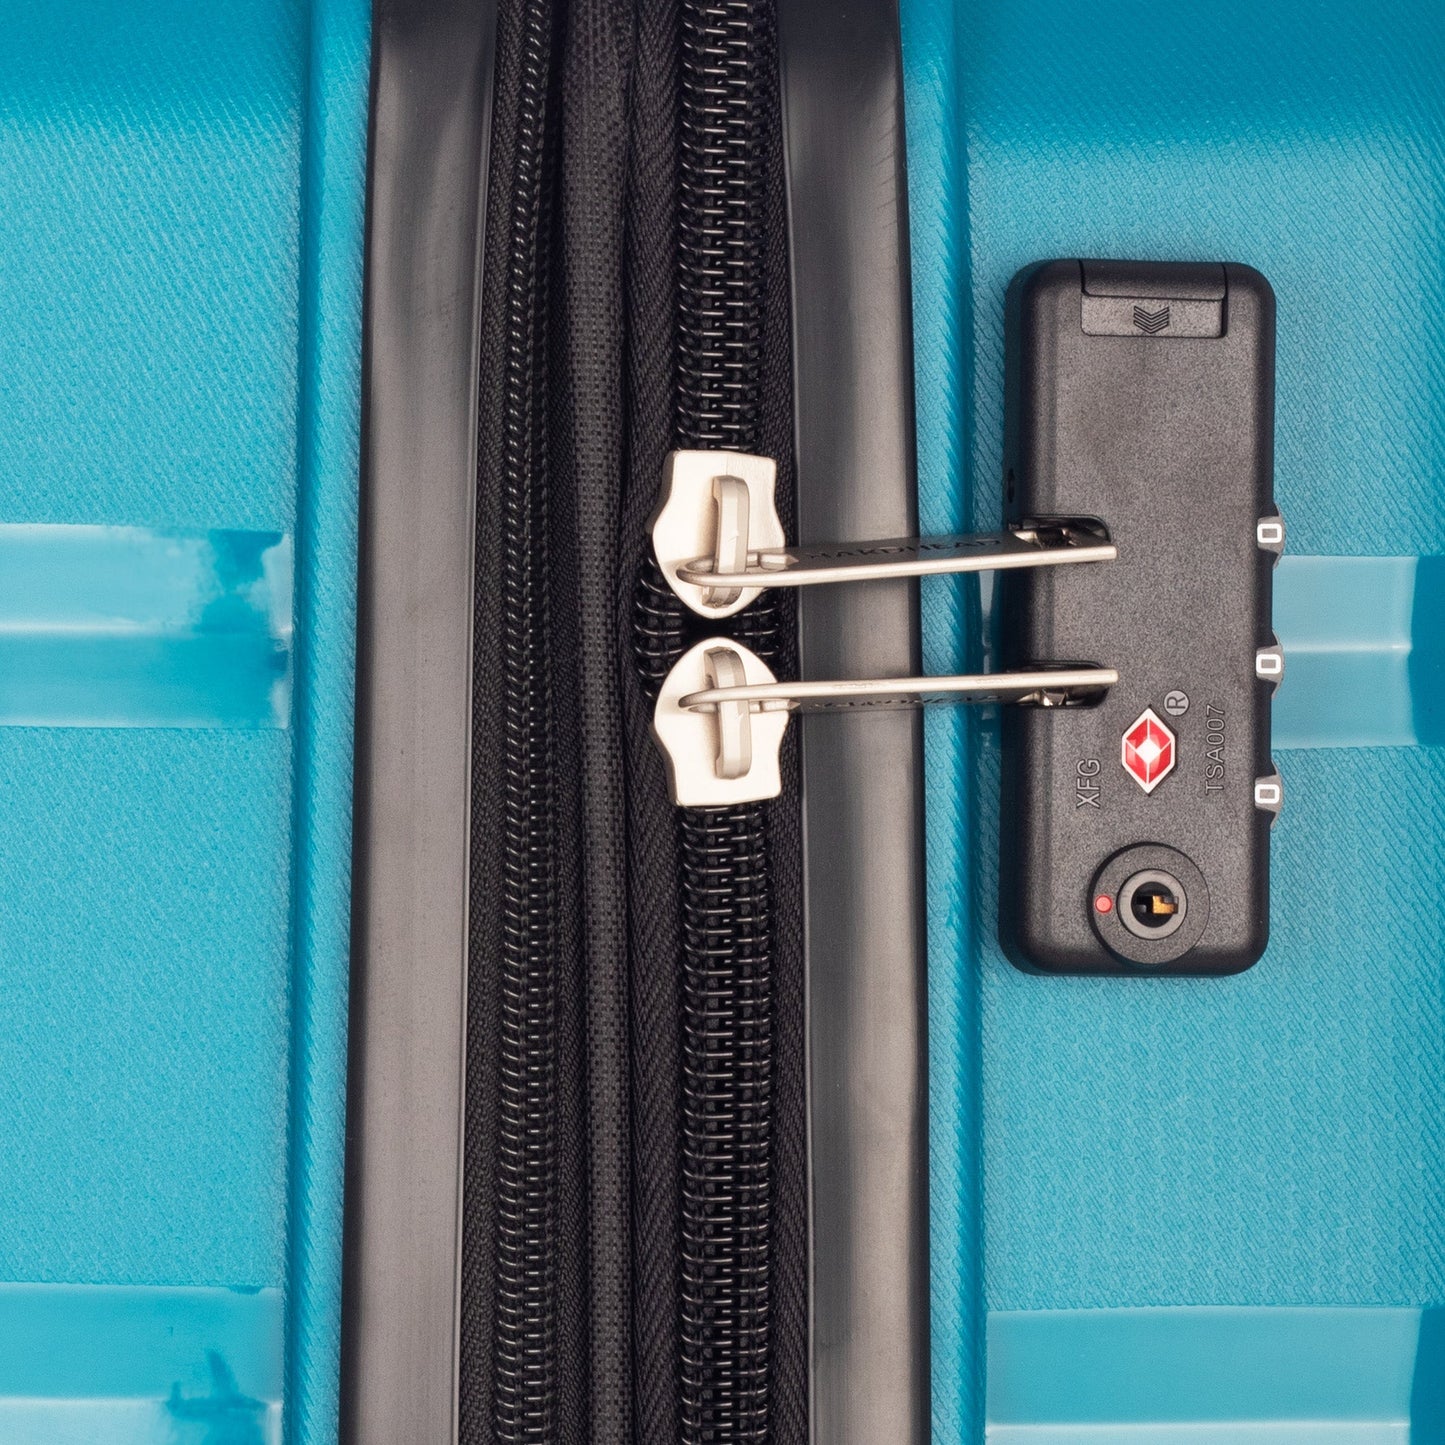 Ian collection turquoise hardhead Luggage (18") Suitcase Lock Spinner Hardshell